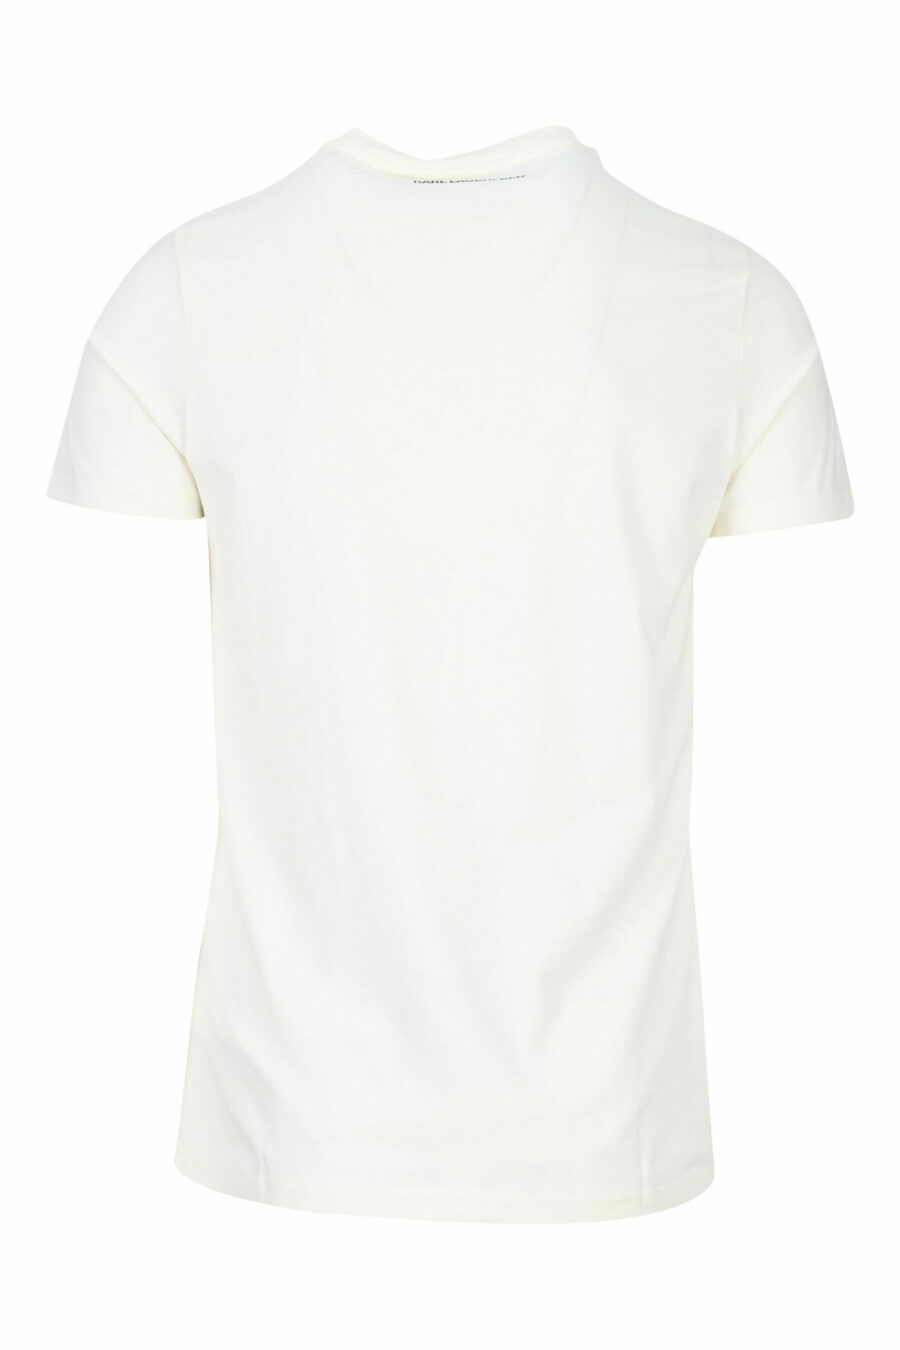 T-shirt beige avec maxilogo "karl" - 4062226681735 1 scaled